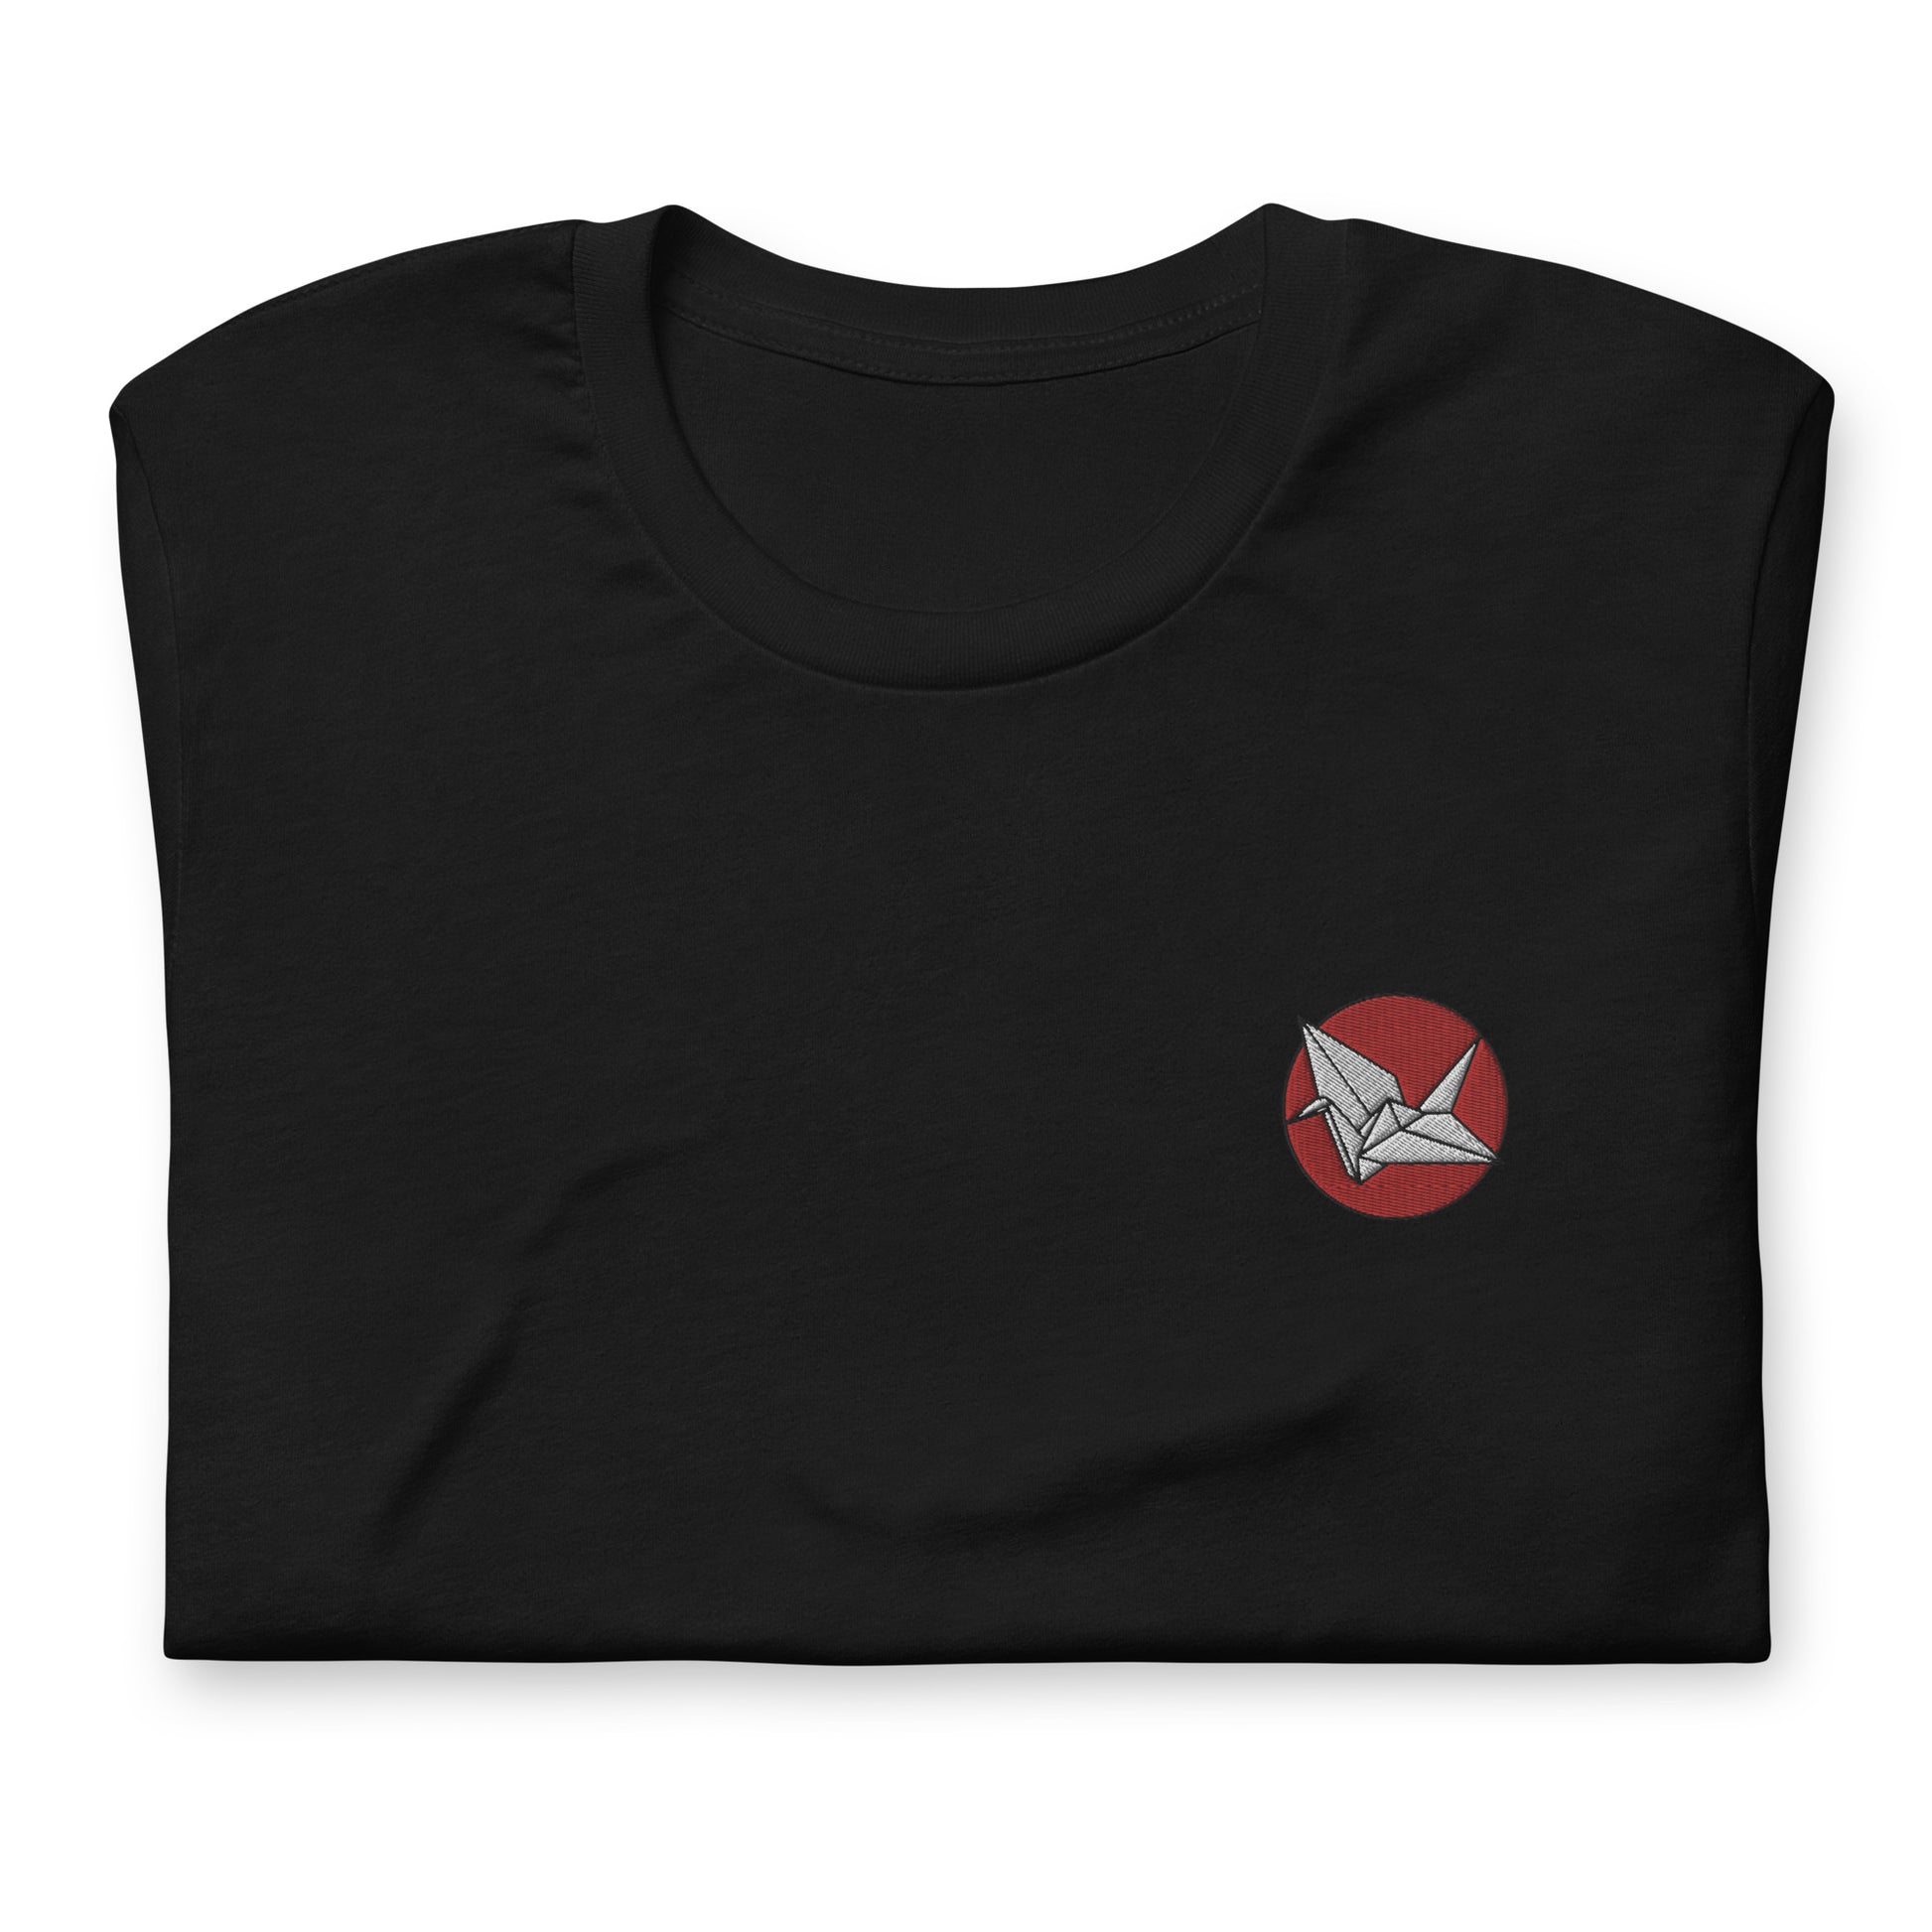 NOMADA Origami Crane embroidered t-shirt, Black color shirt.